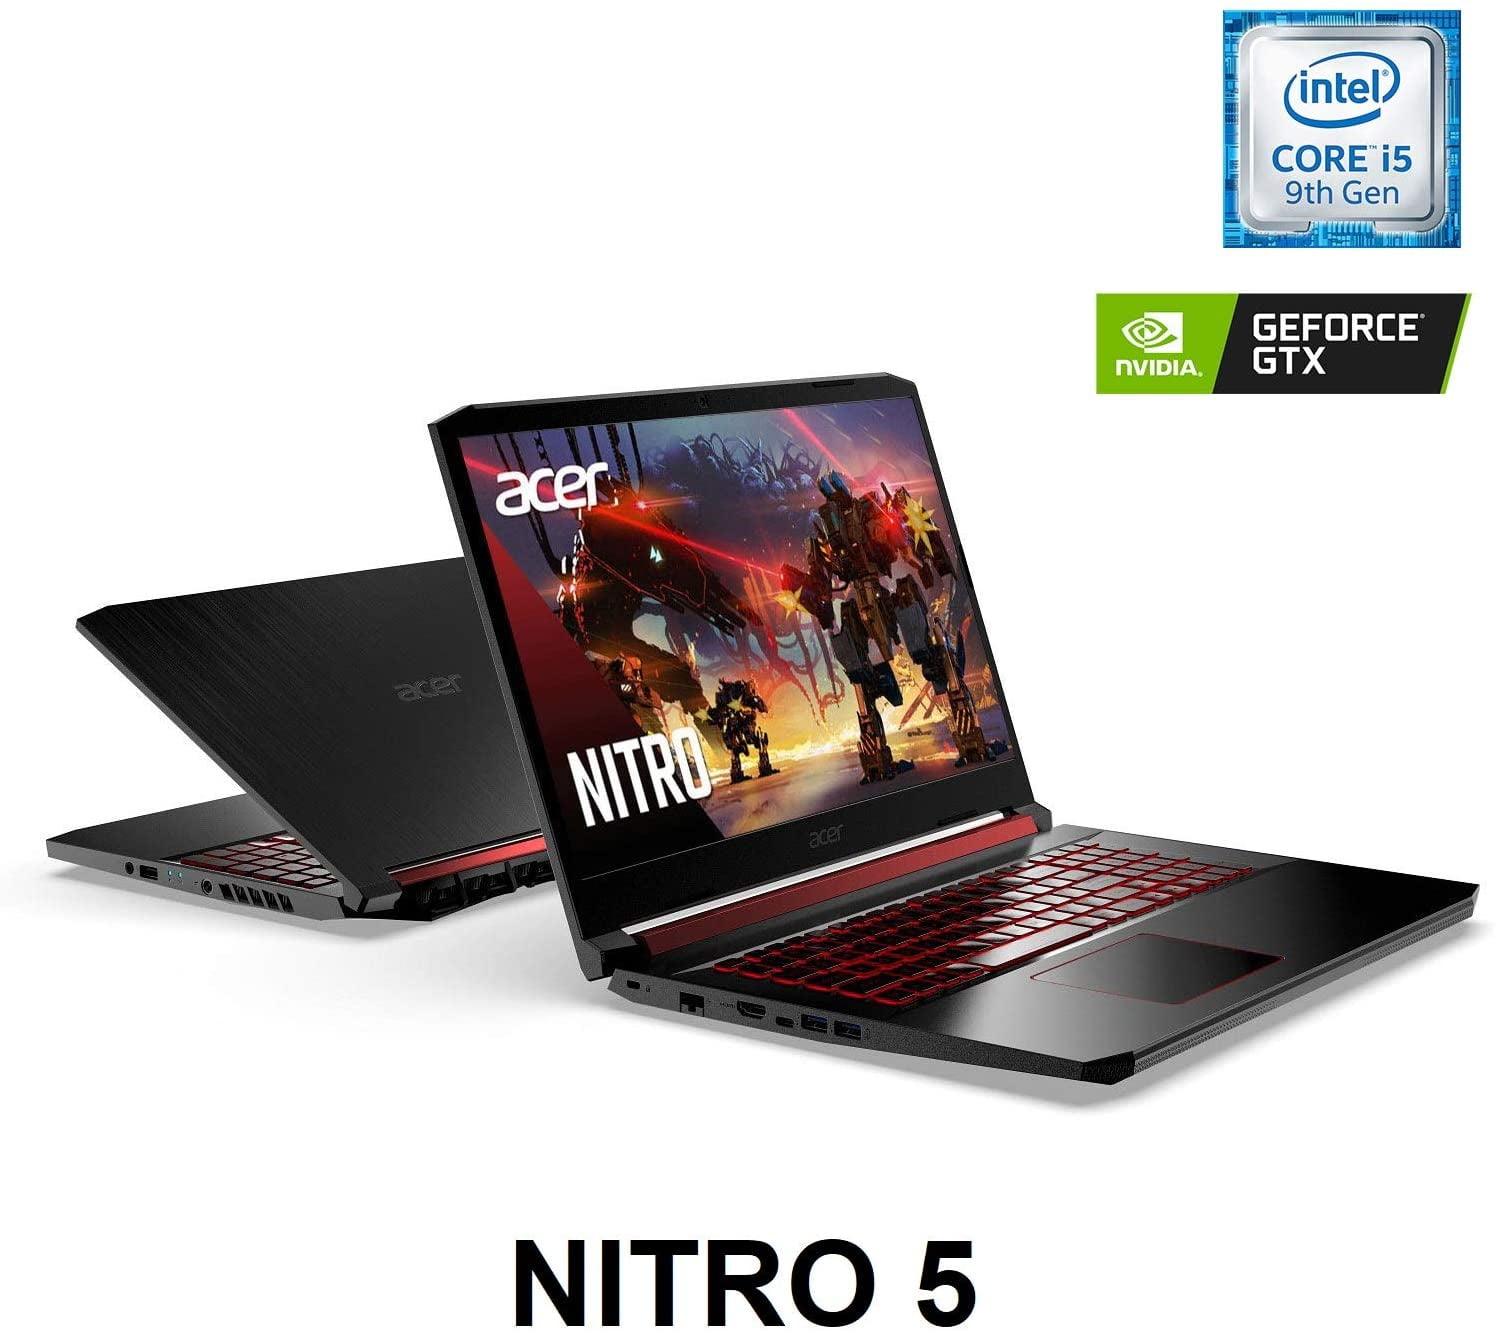 Acer Nitro 5 Gaming Laptop 9th Gen Intel Core I5 9300h Nvidia Geforce Gtx 1650 15 6 Full Hd Ips Display 8gb Ddr4 256gb Nvme Ssd Wifi 6 Waves Maxxaudio Backlit Keyboard Walmart Com